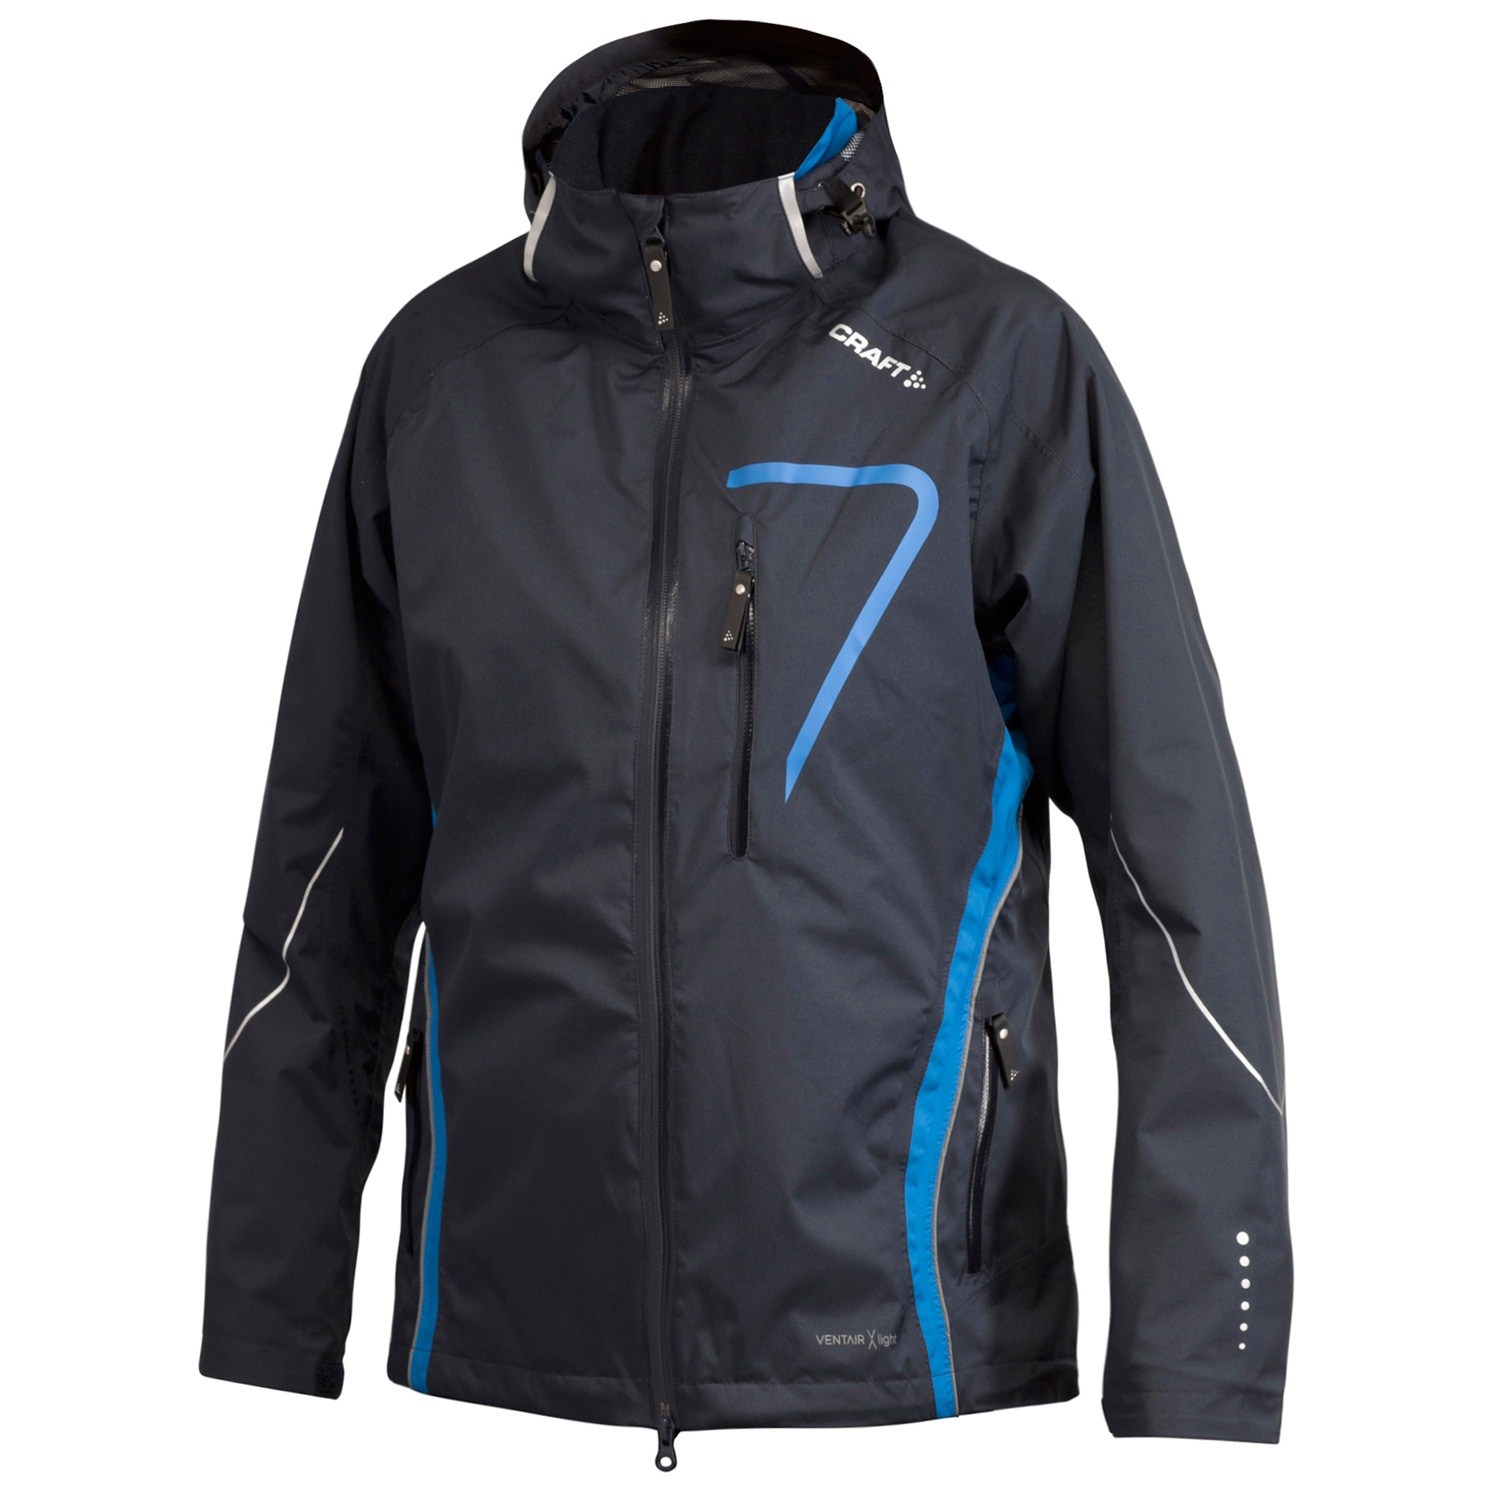 Craft Glacier Jacket Men - Jackets/vests - Athletic apparel - Sport ...